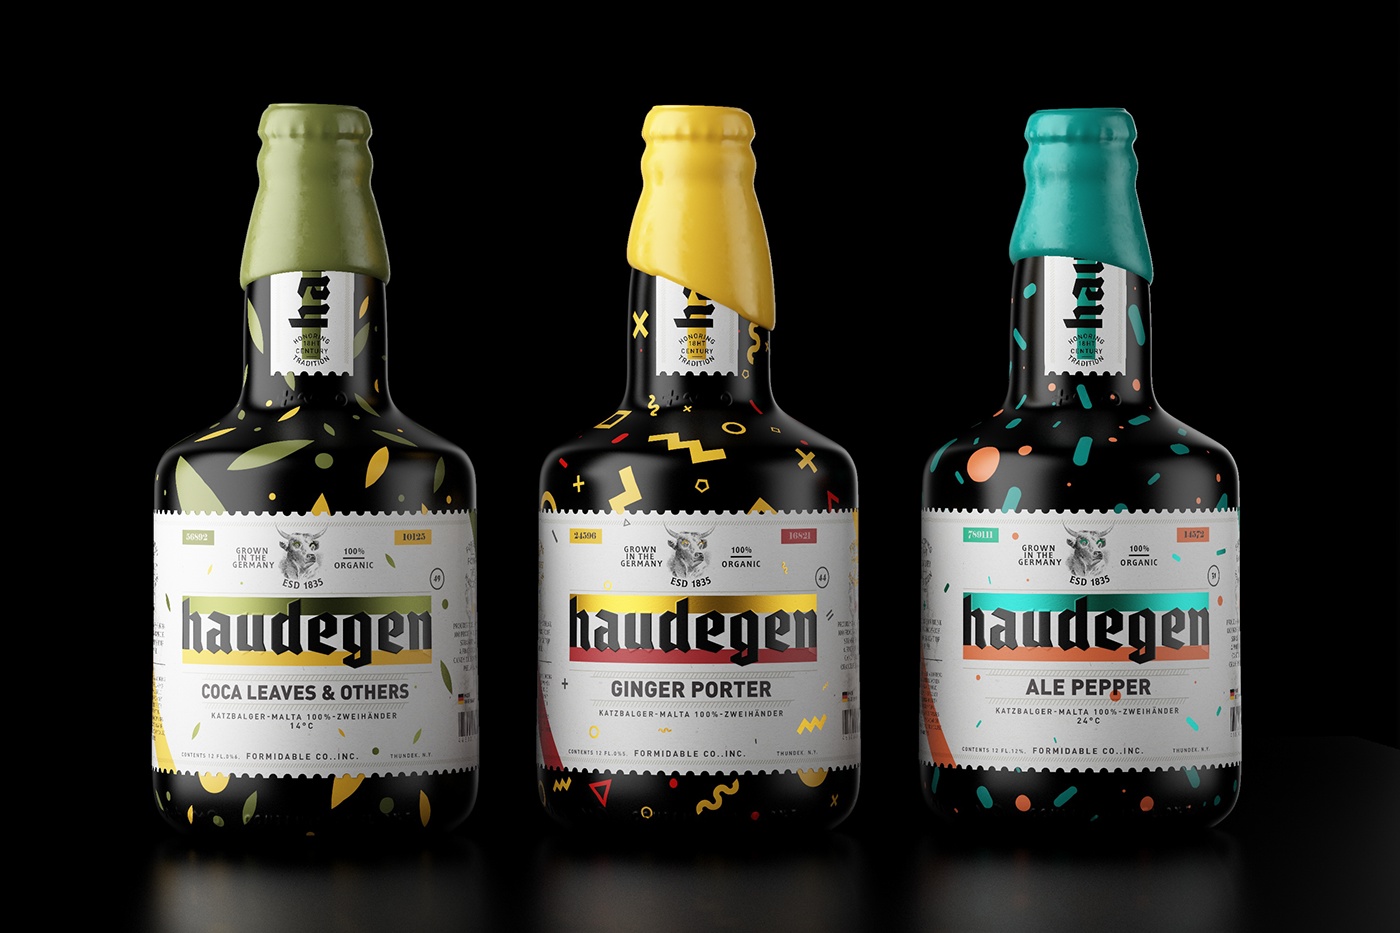 beer Haudegen ale pepper alcohol bottle 3D cinema 4d vray pattern